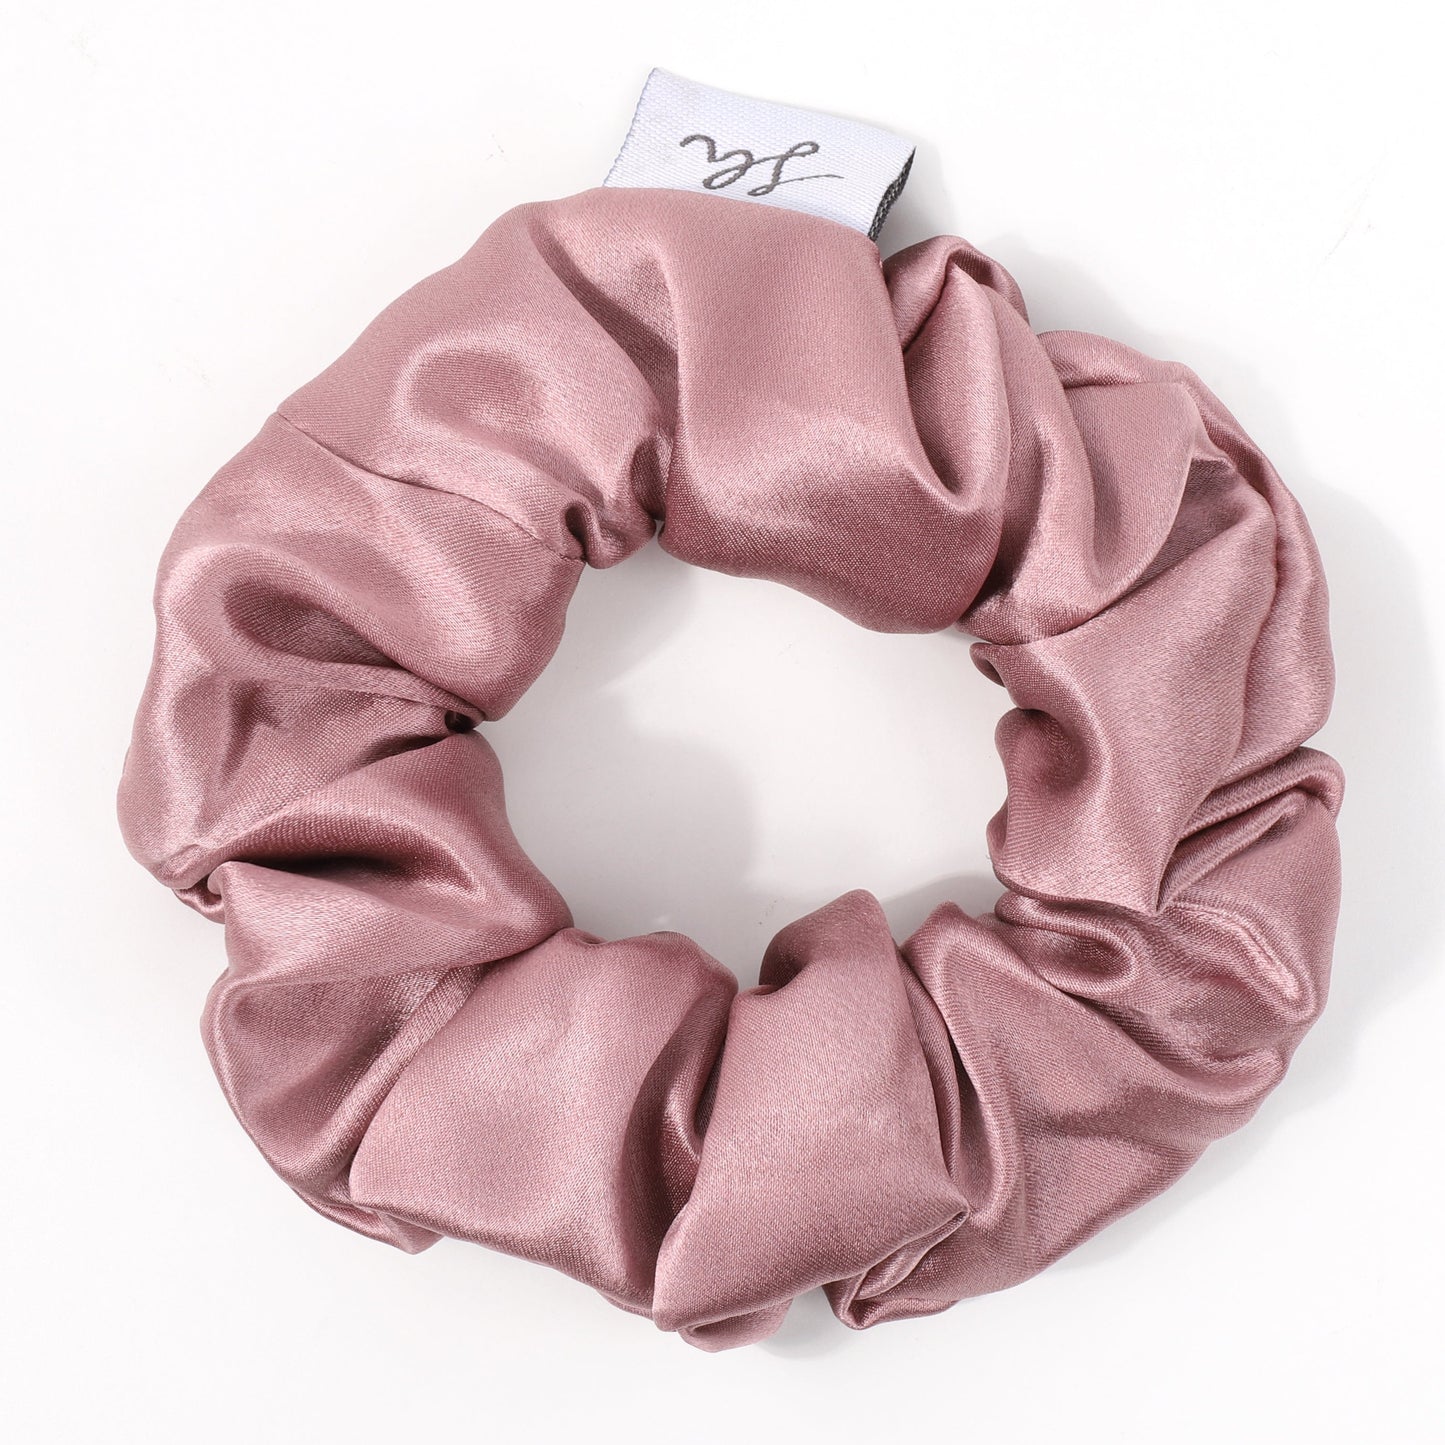 Síoda Silky 100% Mulberry Silk scrunchie size medium colour is Blush Pink